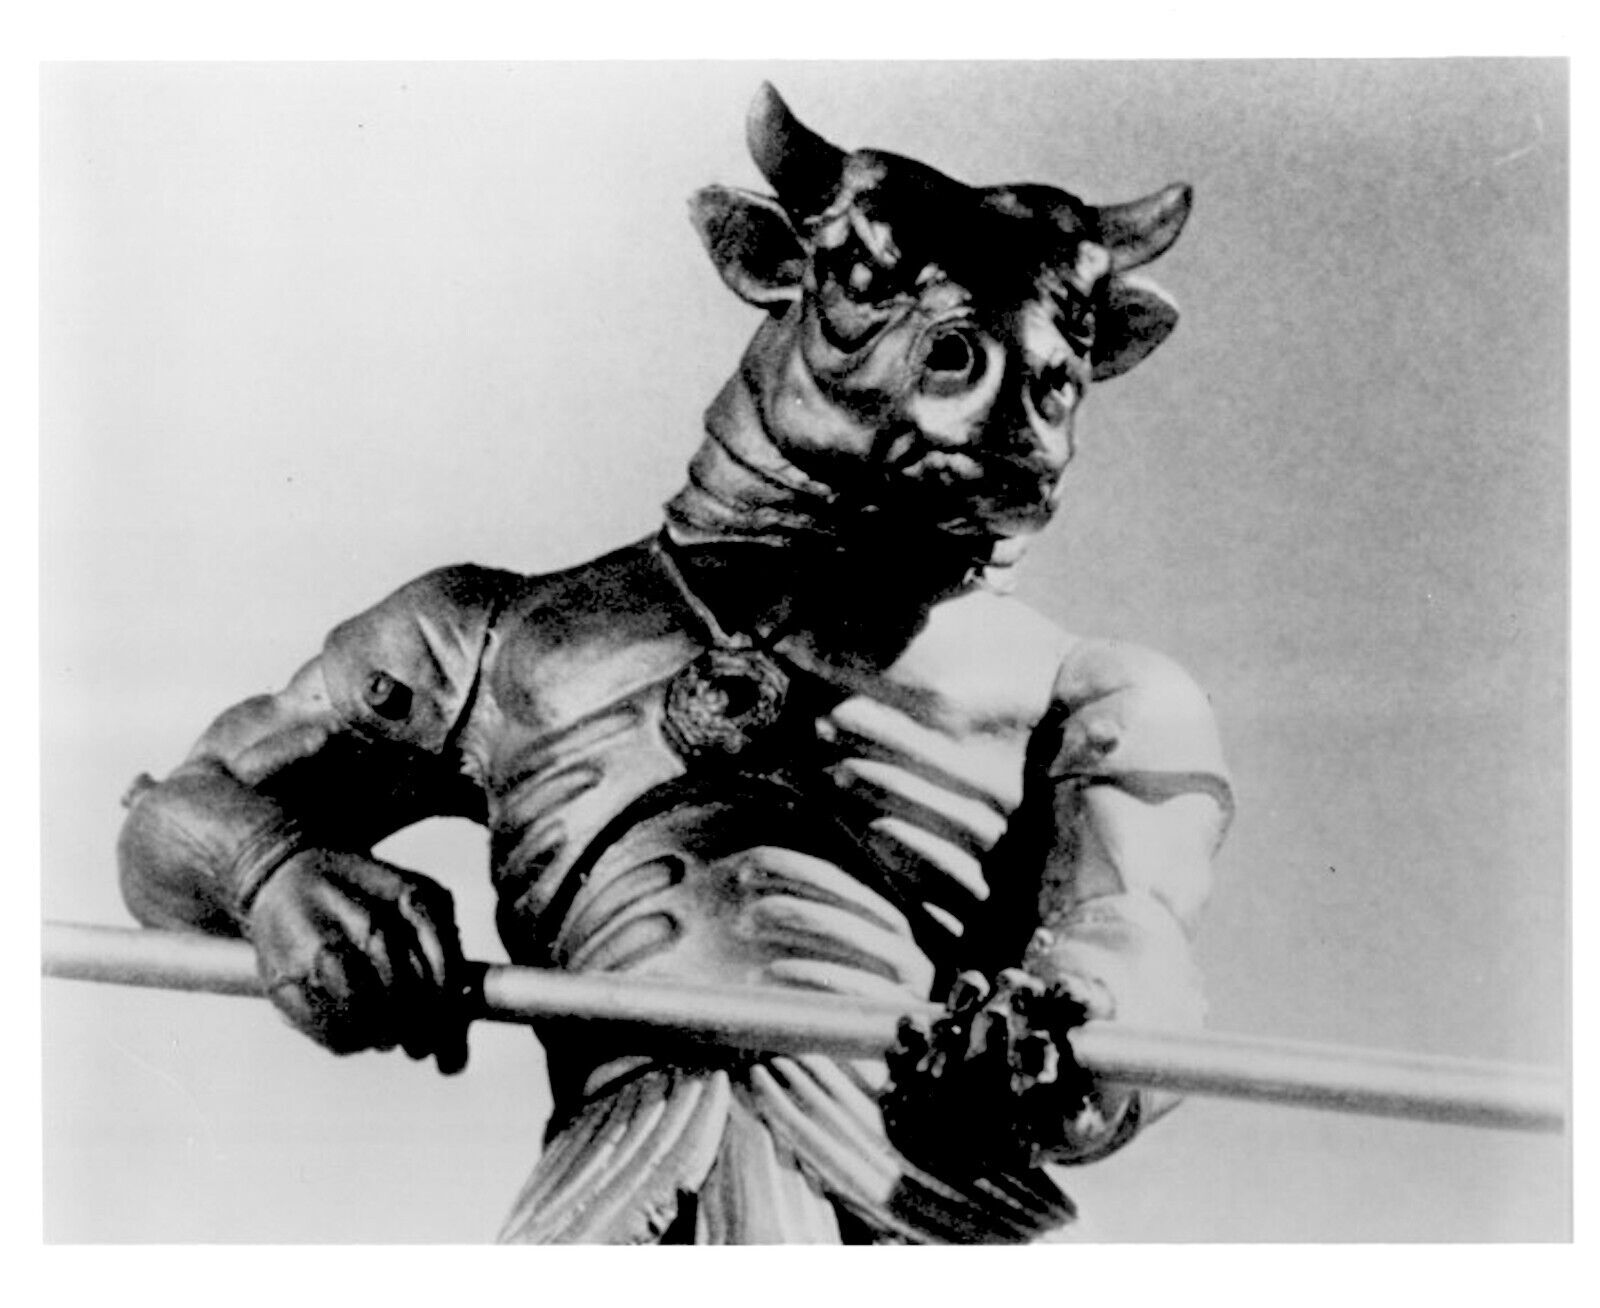 1977’s SINBAD & THE EYE OF THE TIGER Minaton holds javelin b/w 8x10 scene